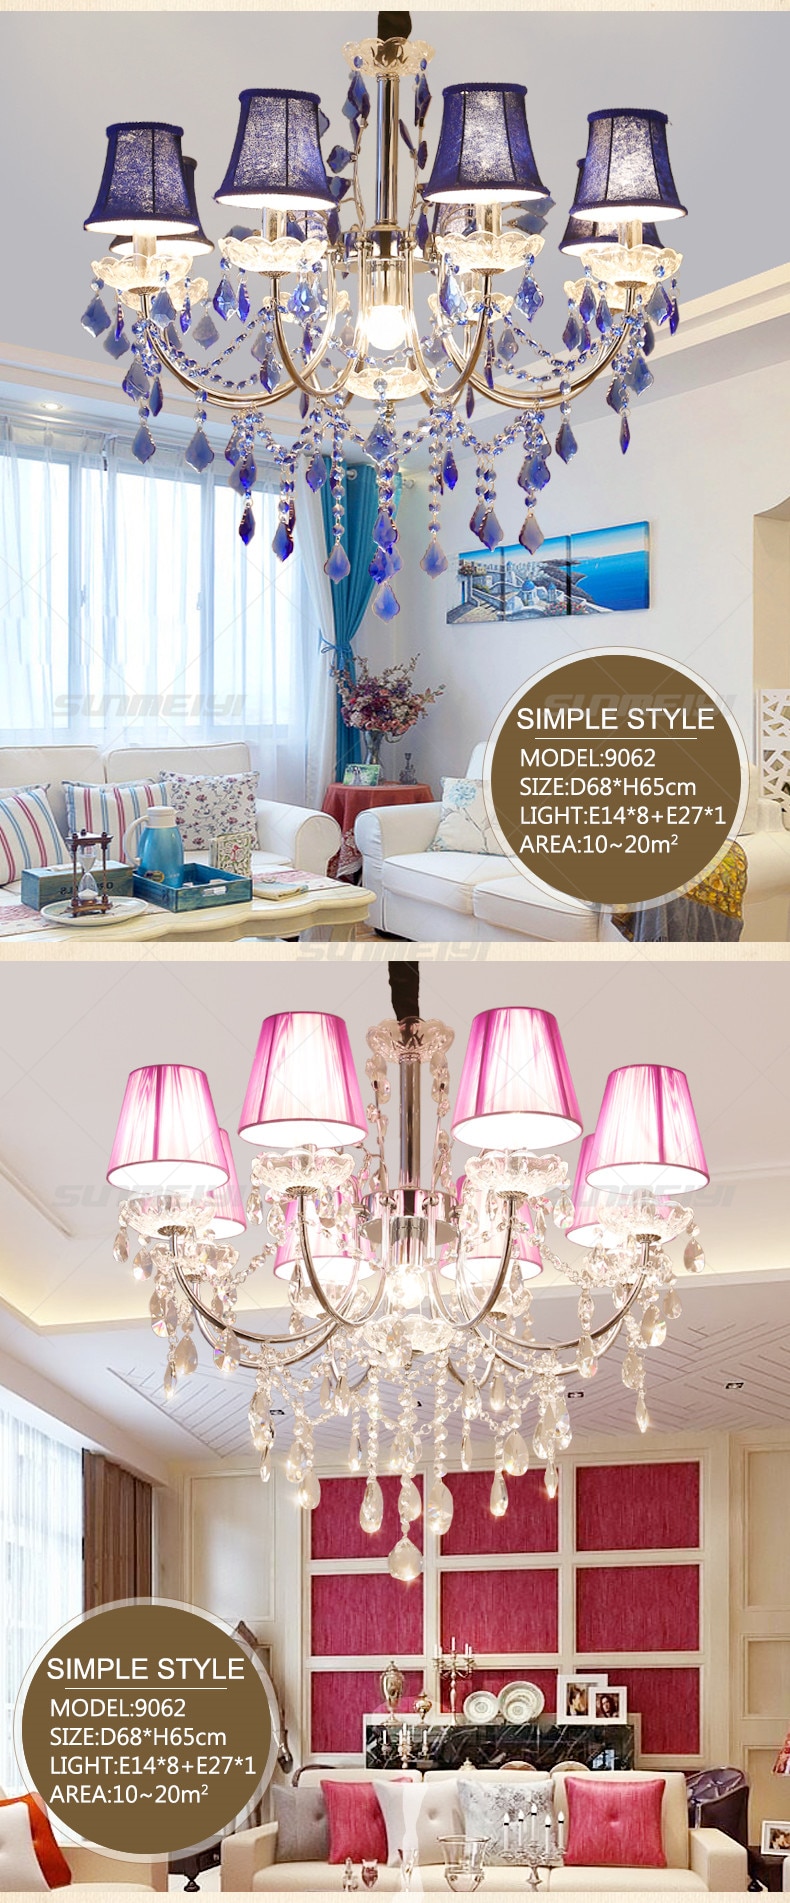 Modern Iron Crystal Chandelier Lights Lamp Chandeliers For bedroom Living room Fixture Crystal Light Lustres de crista lighting